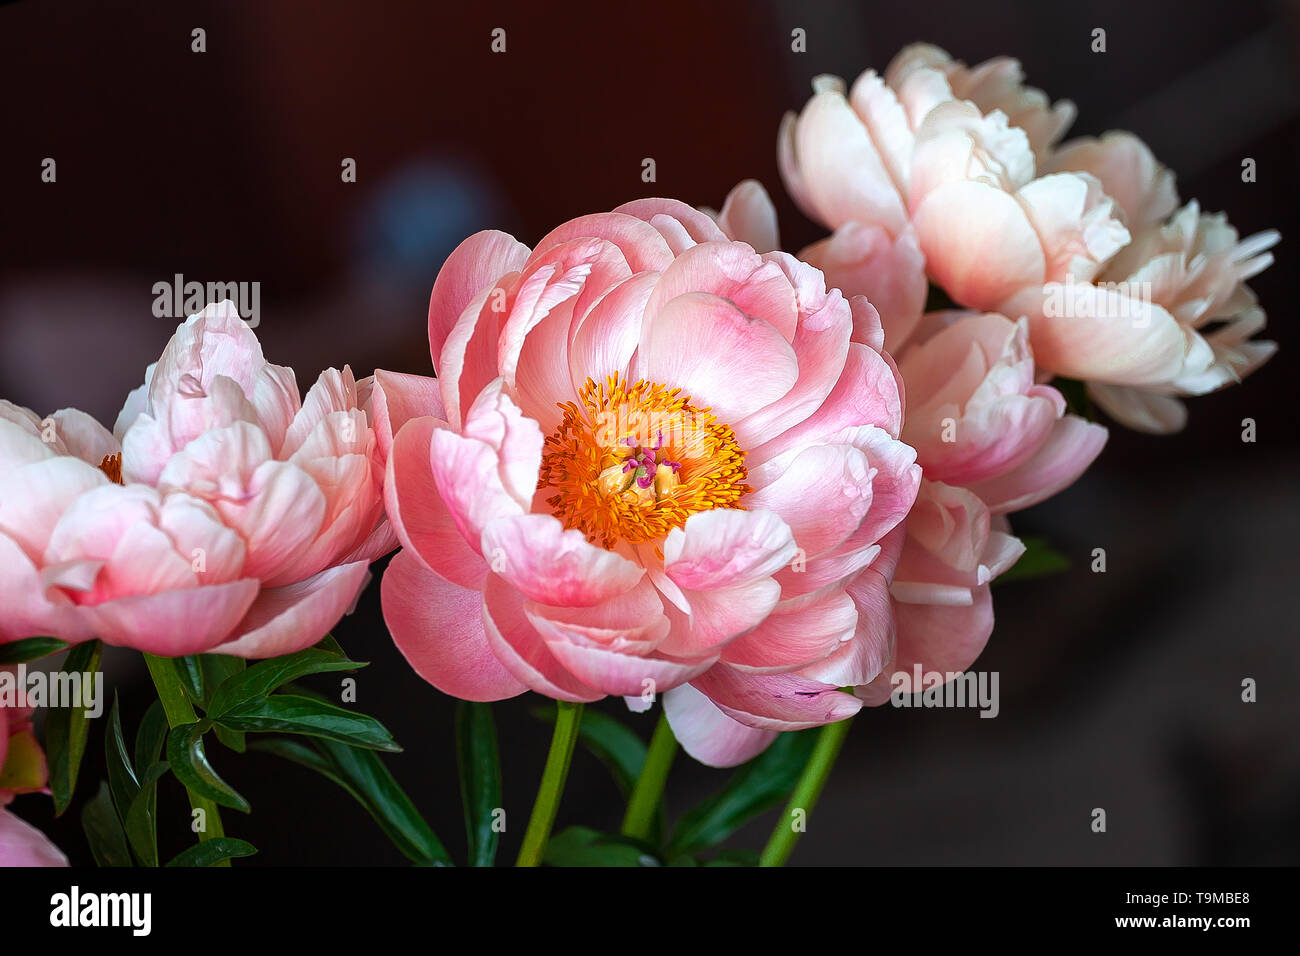 Pink peony flowers, close-up Stock Photo